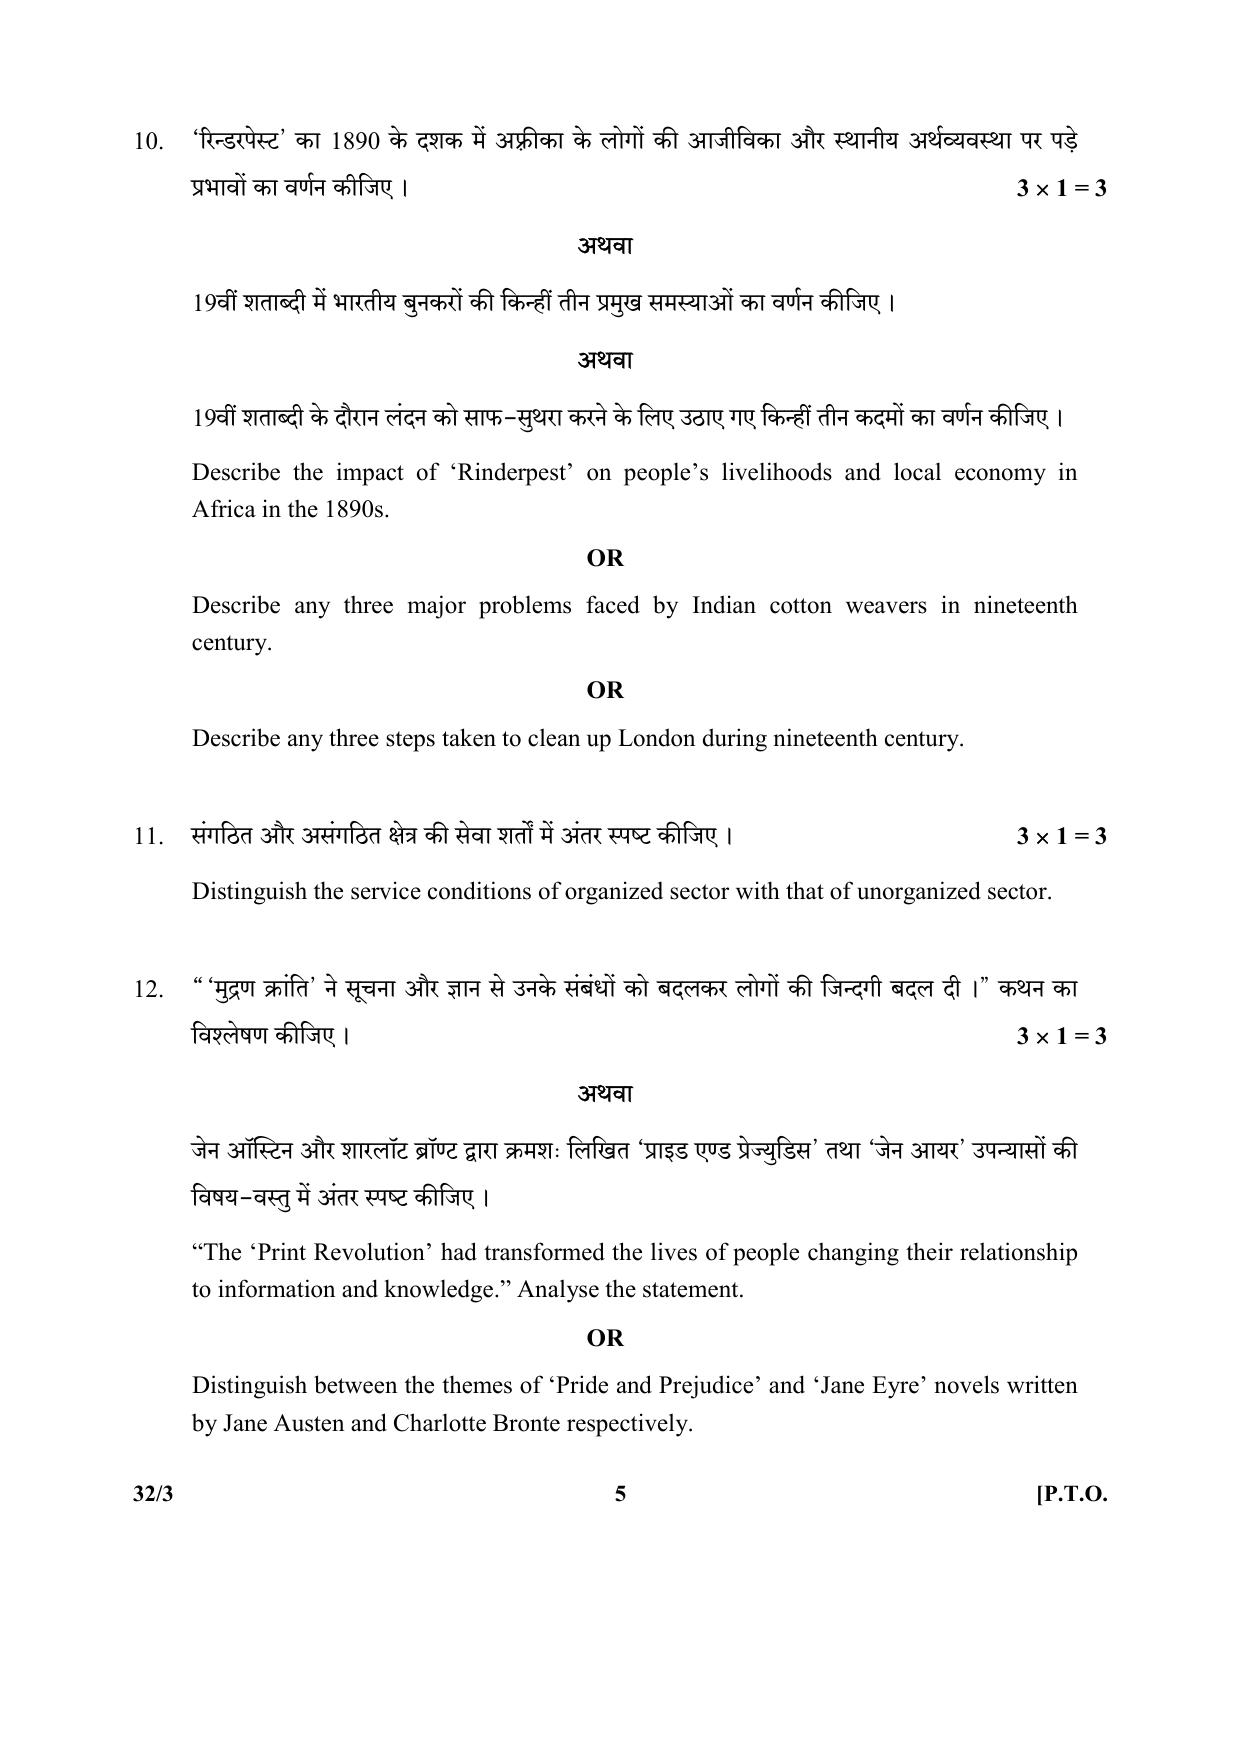 CBSE Class 10 32-3_Social Science SET-3 2018 Question Paper - Page 5